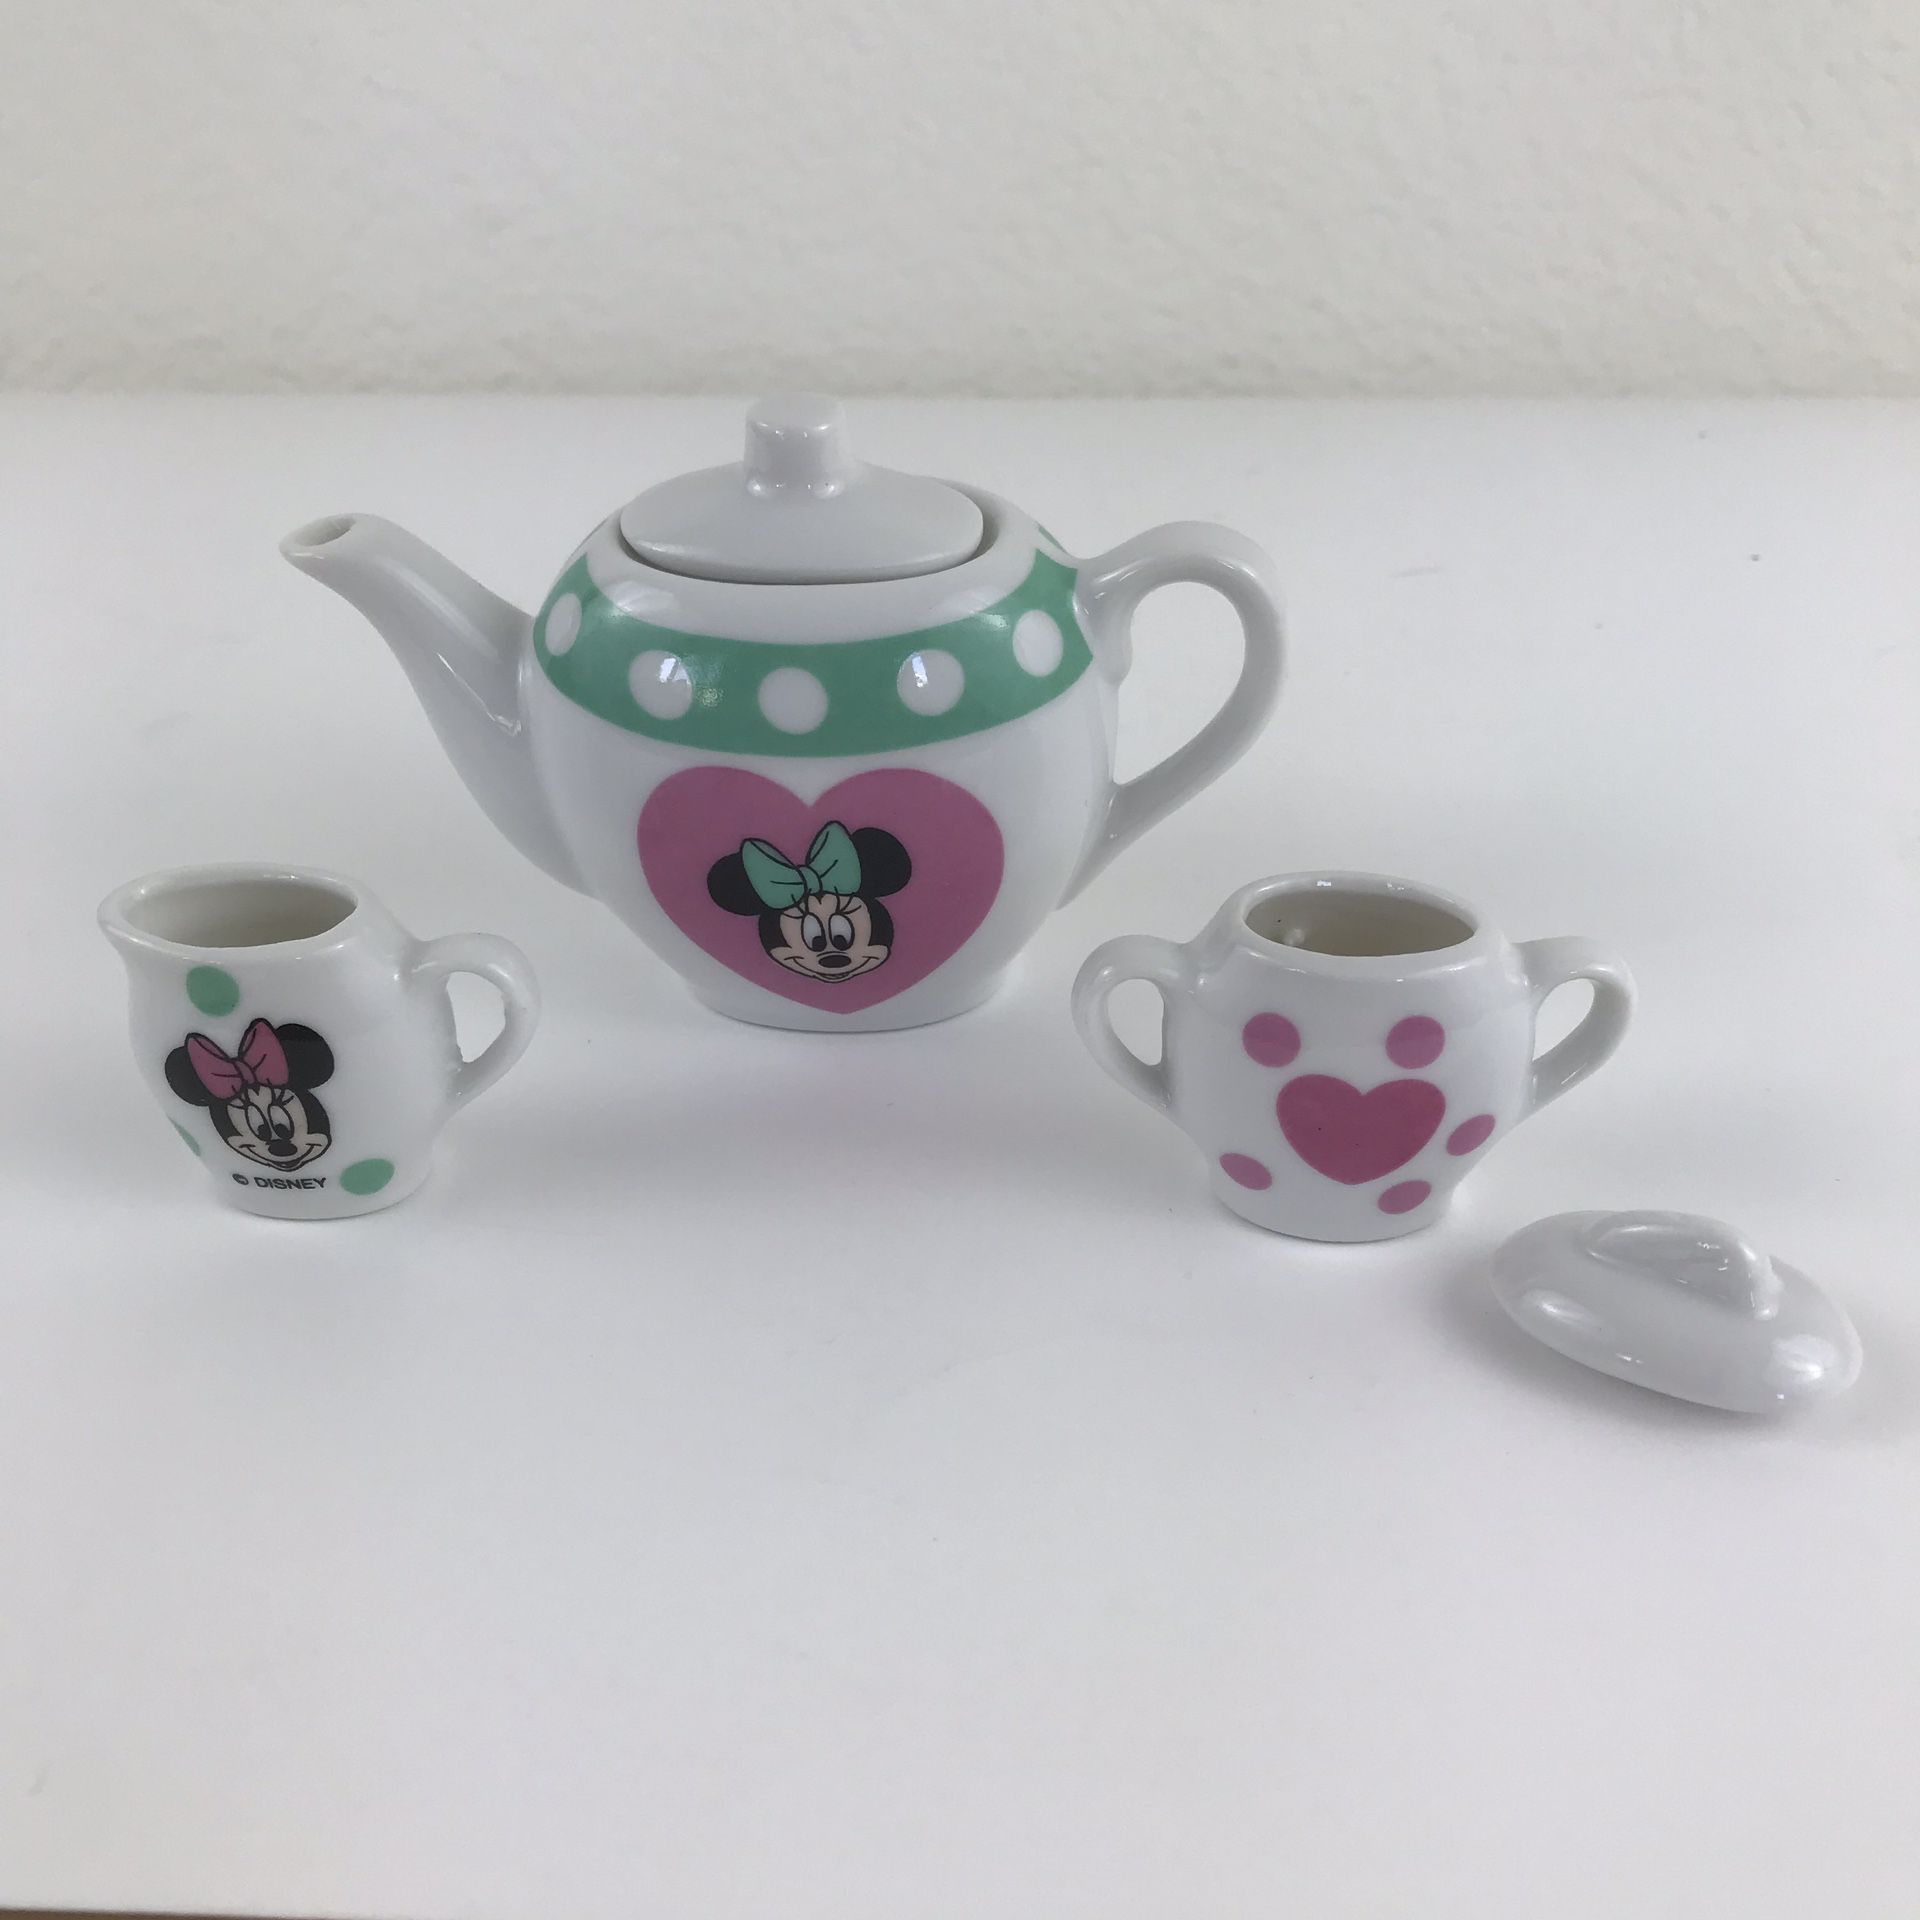 Minnie n me Disney Toy China Tea Set 17 pieces 1990s